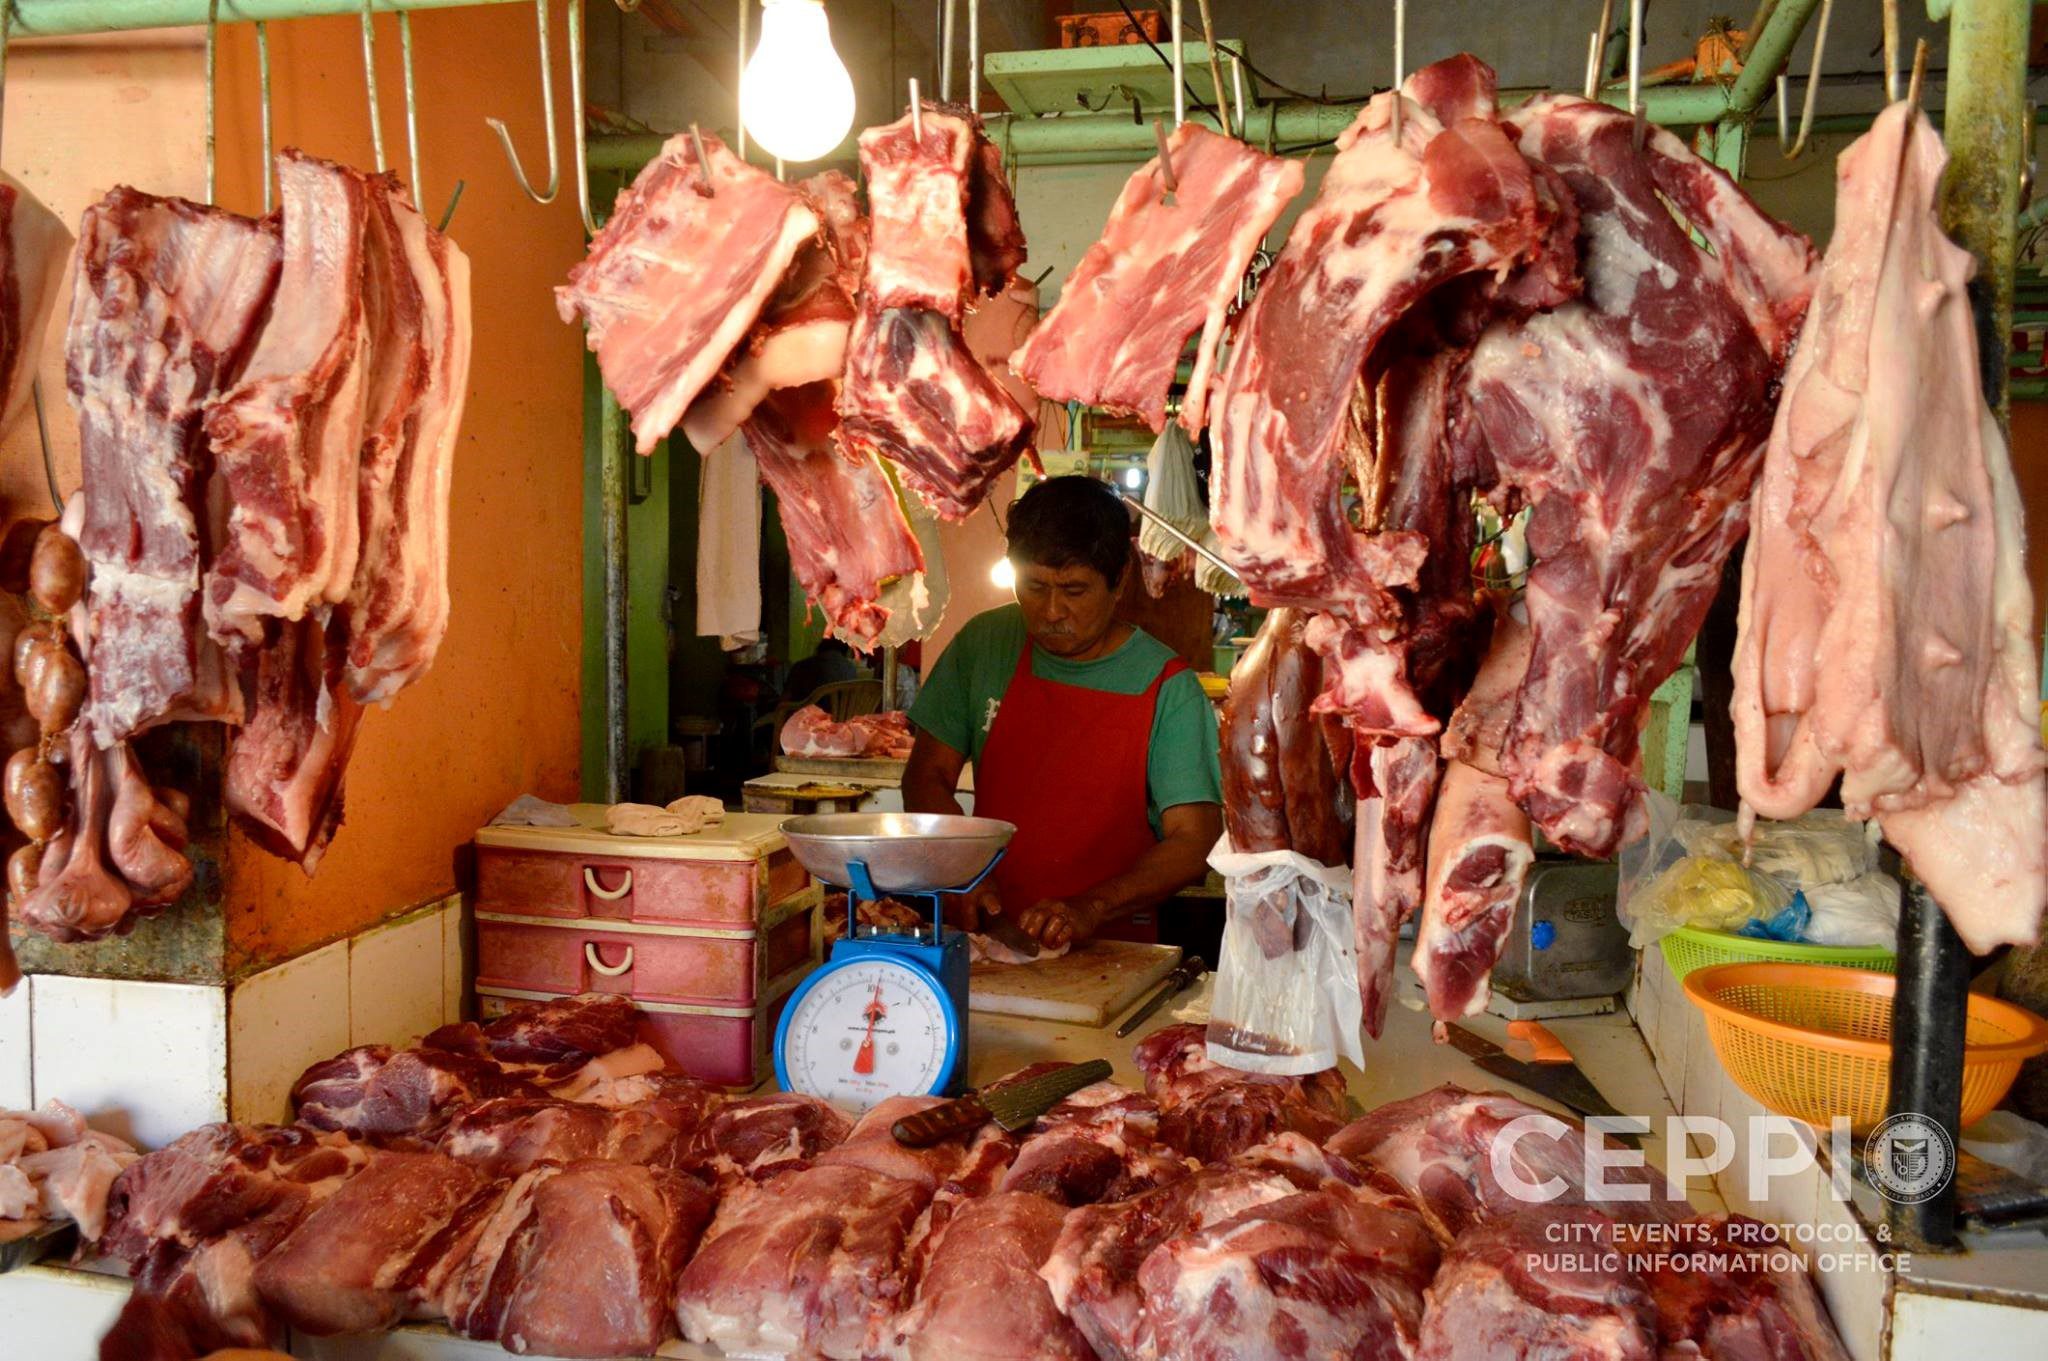 BAWAS na an kada kilo nin karneng orig sa merkado publiko kan syudad nin Naga mantang mantenido an supply nin livestock.